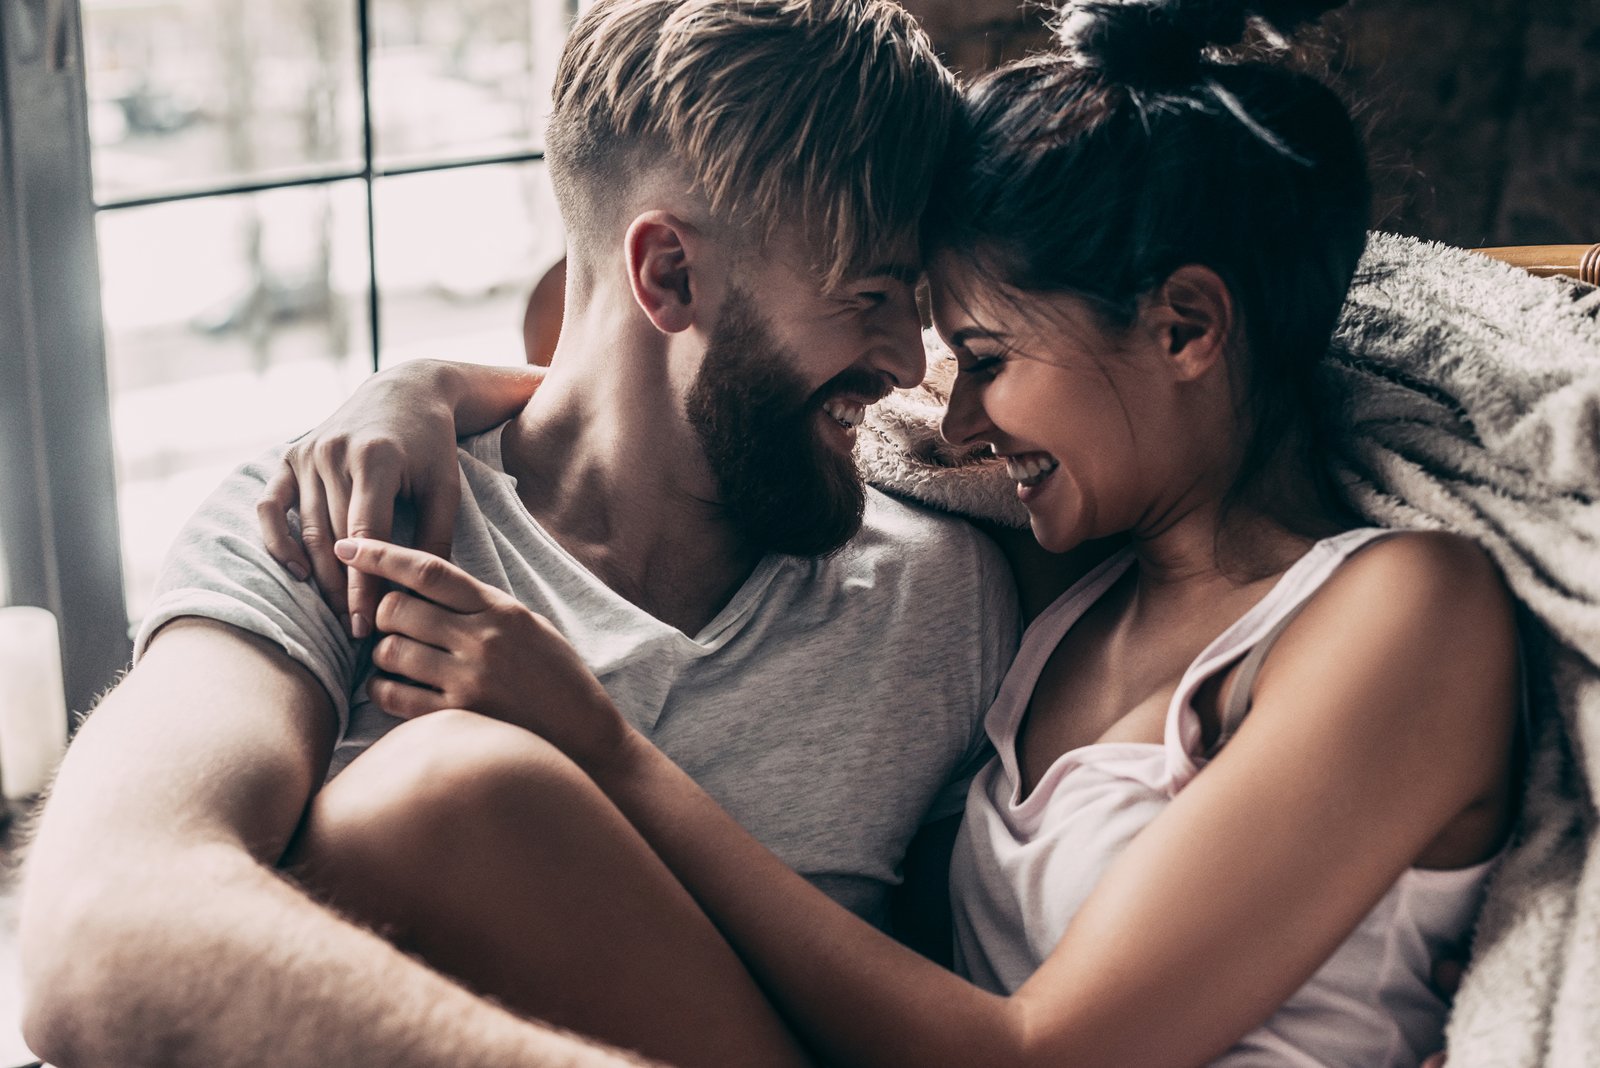 Cuddling couple - sex tips against lockdown boredom